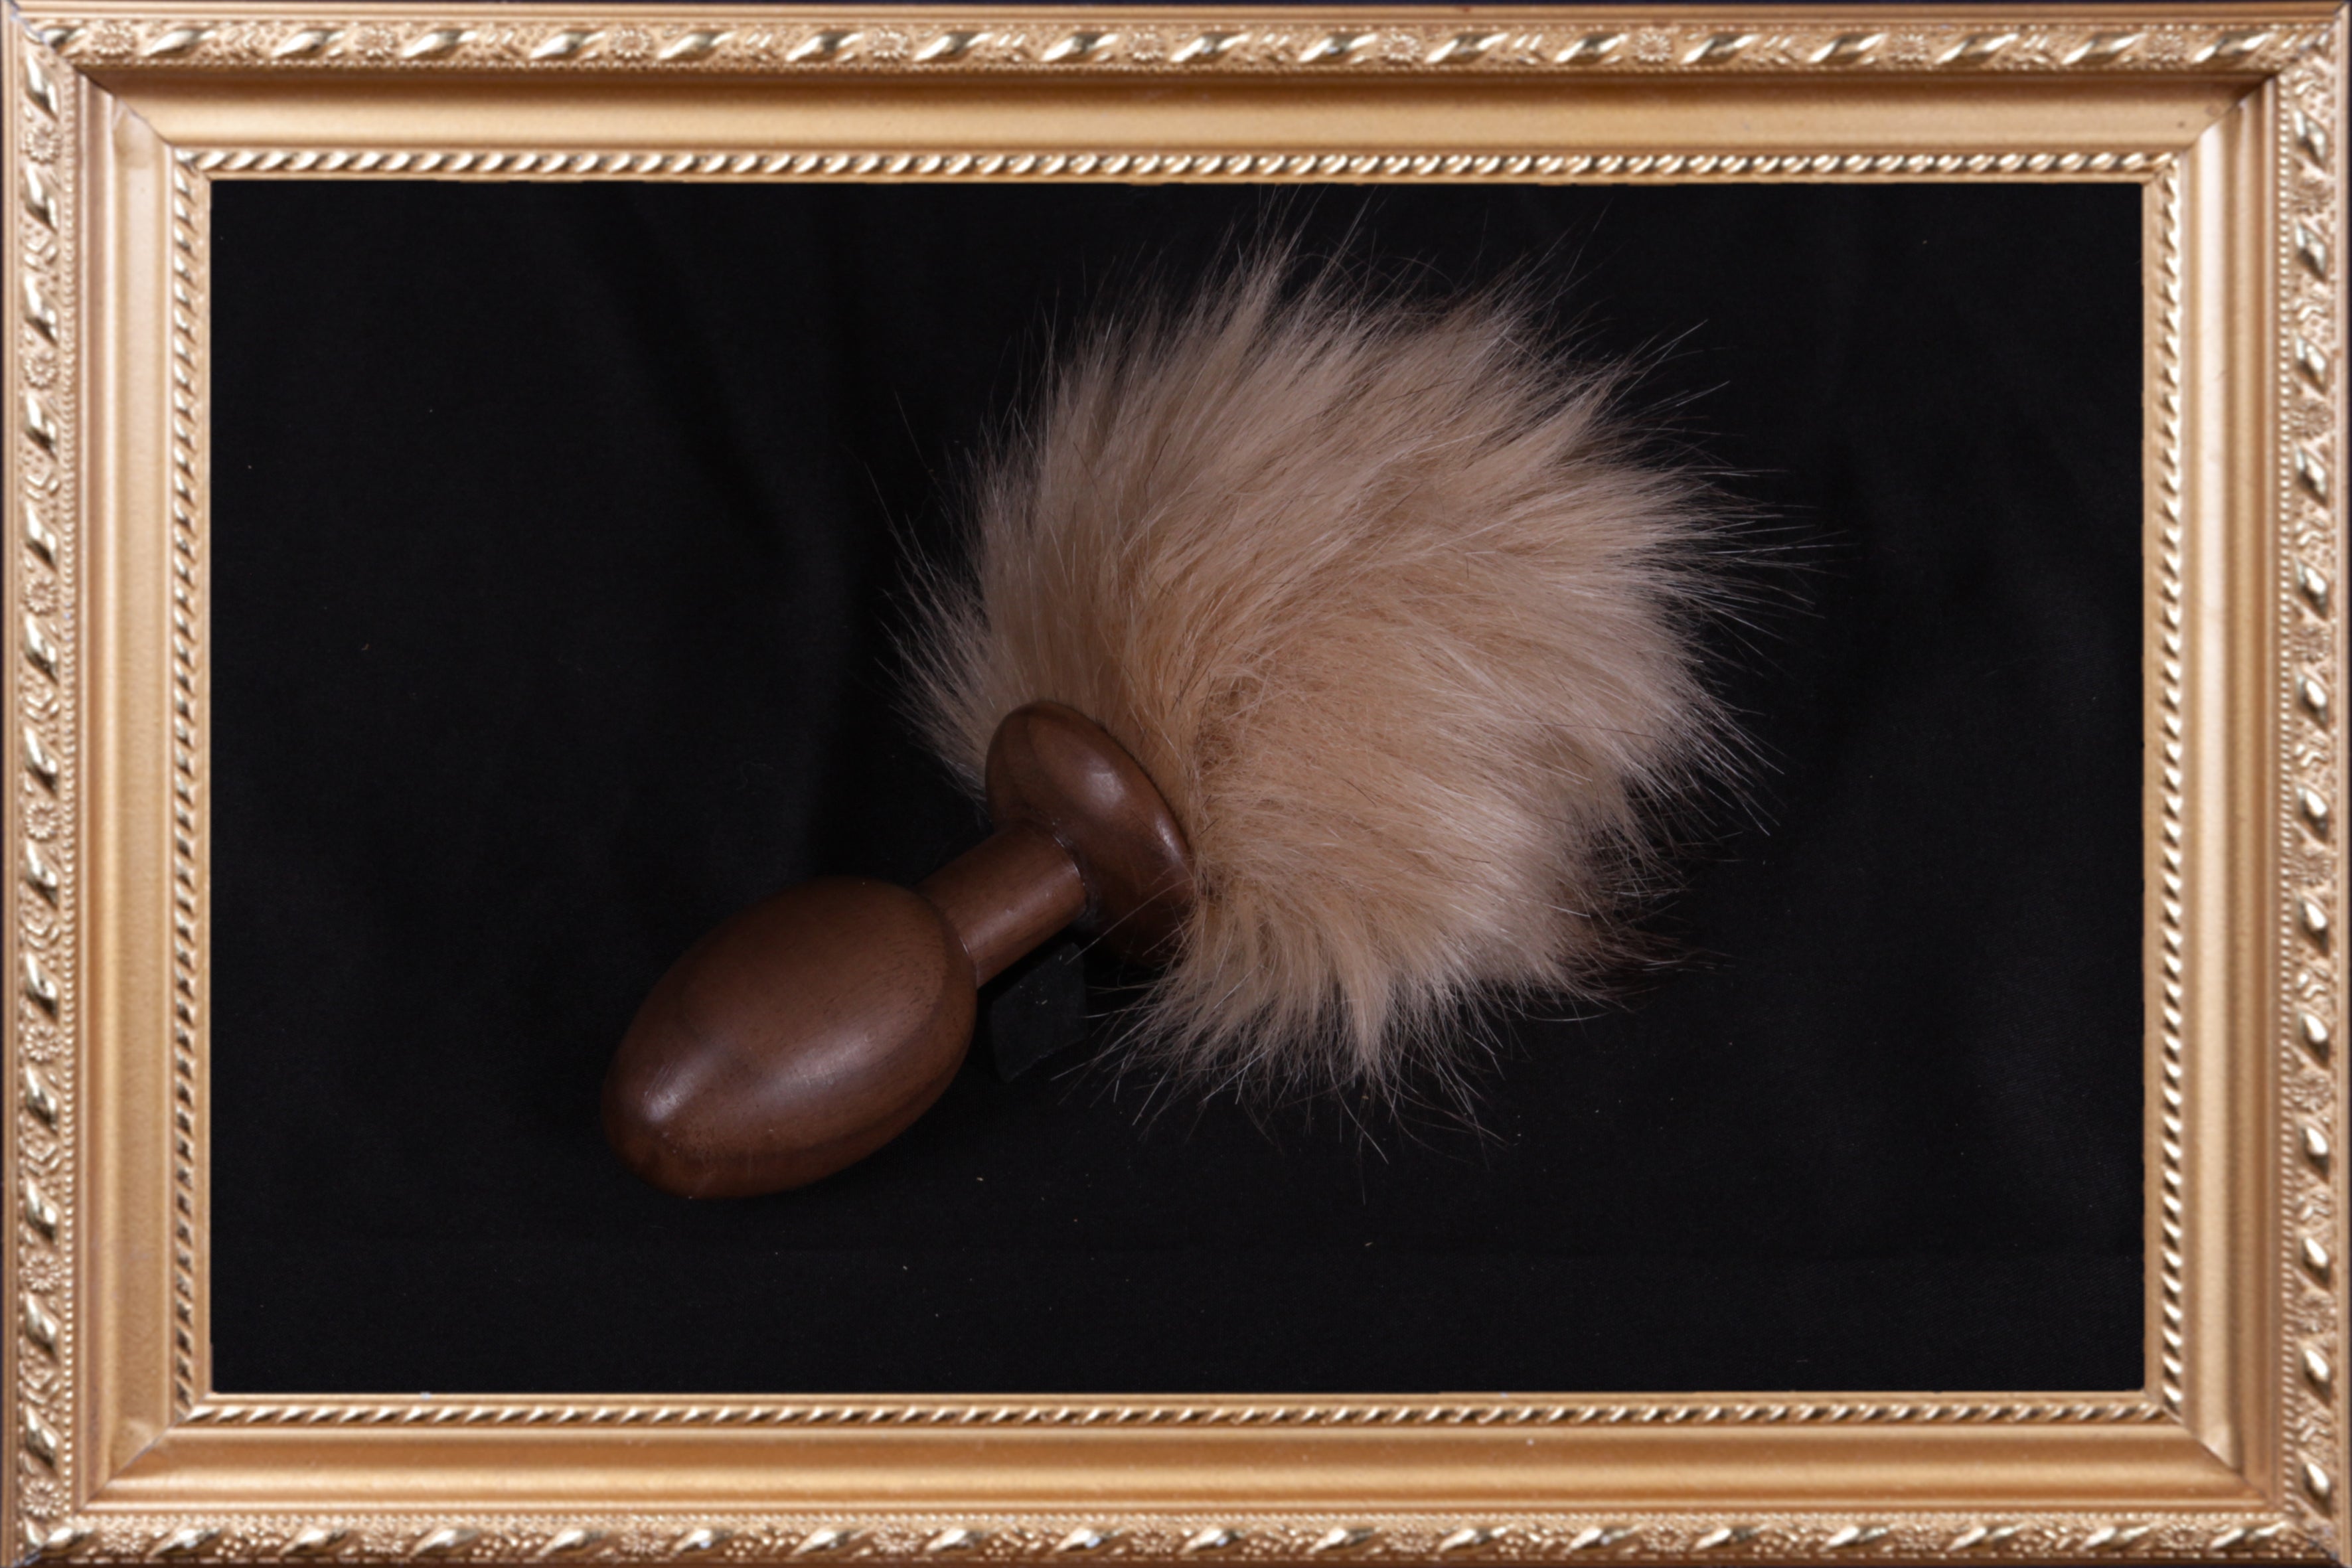 OACHKATZLSCHWOAF Nuss Hase Beige || Wooden Furry Tail Anal Butt Plug Holz|| Fox Bunny Raccoon || Sex Toy || Handmade by Holz-Knecht.at